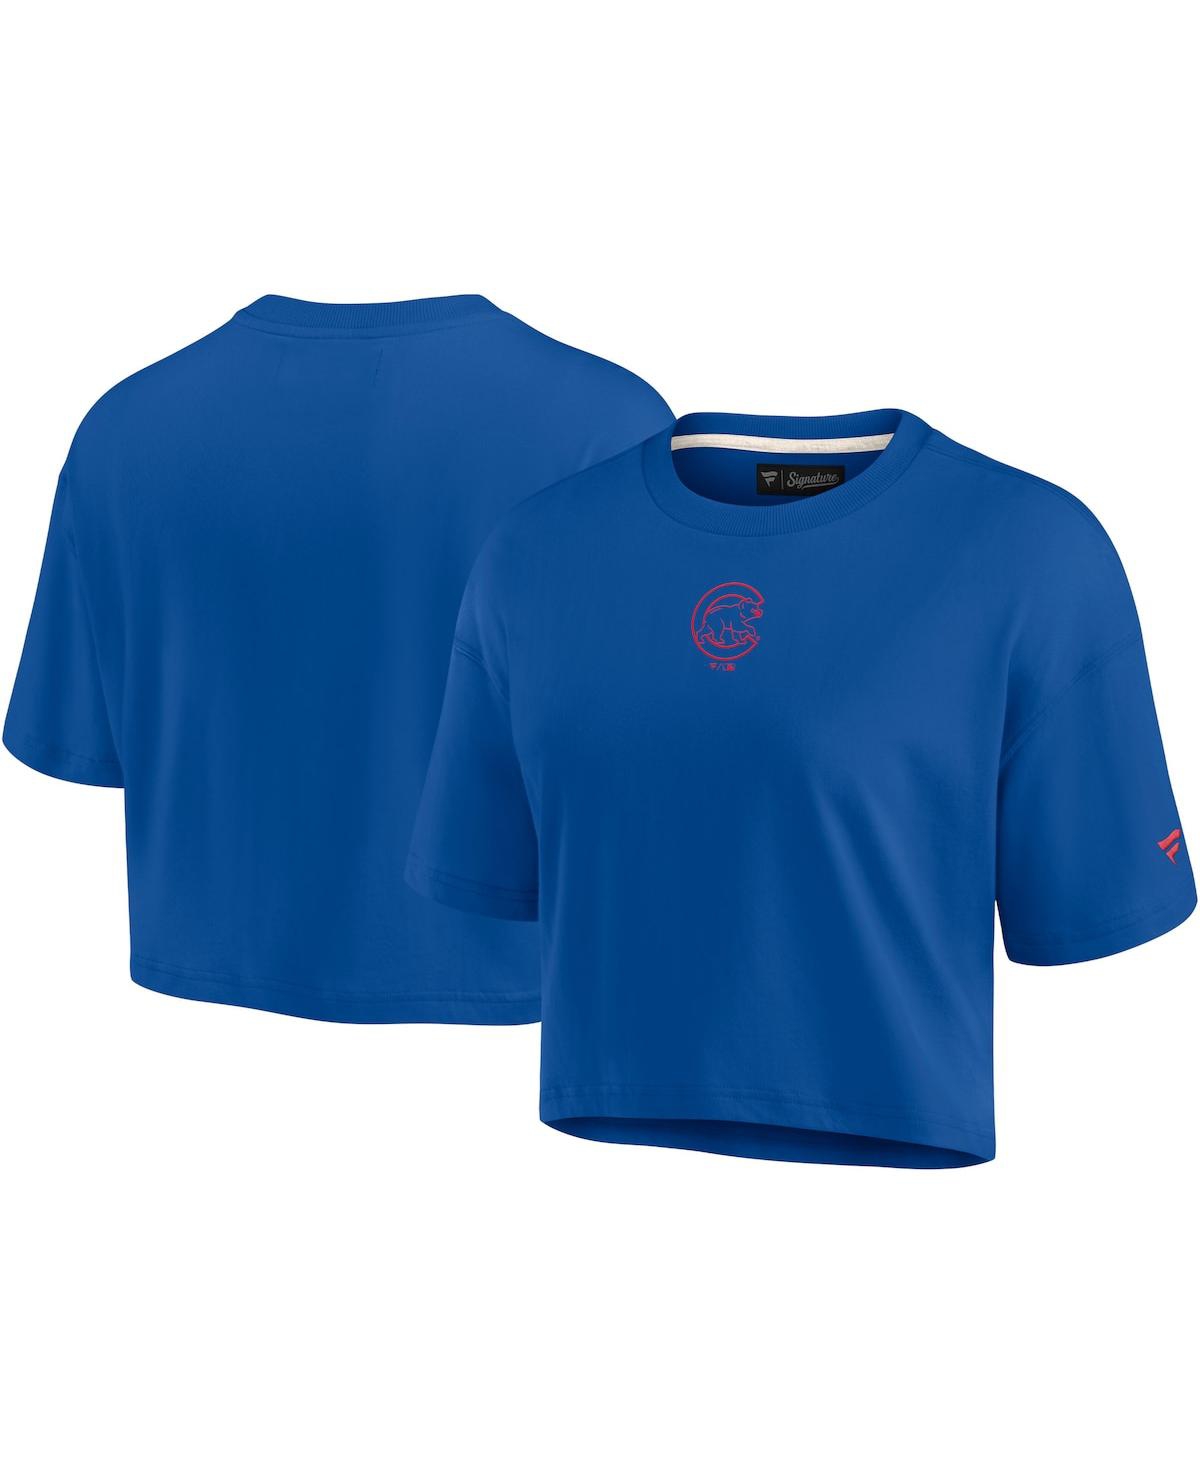 Fanatics Signature Women's  Royal Chicago Cubs Super Soft Short Sleeve Cropped T-shirt